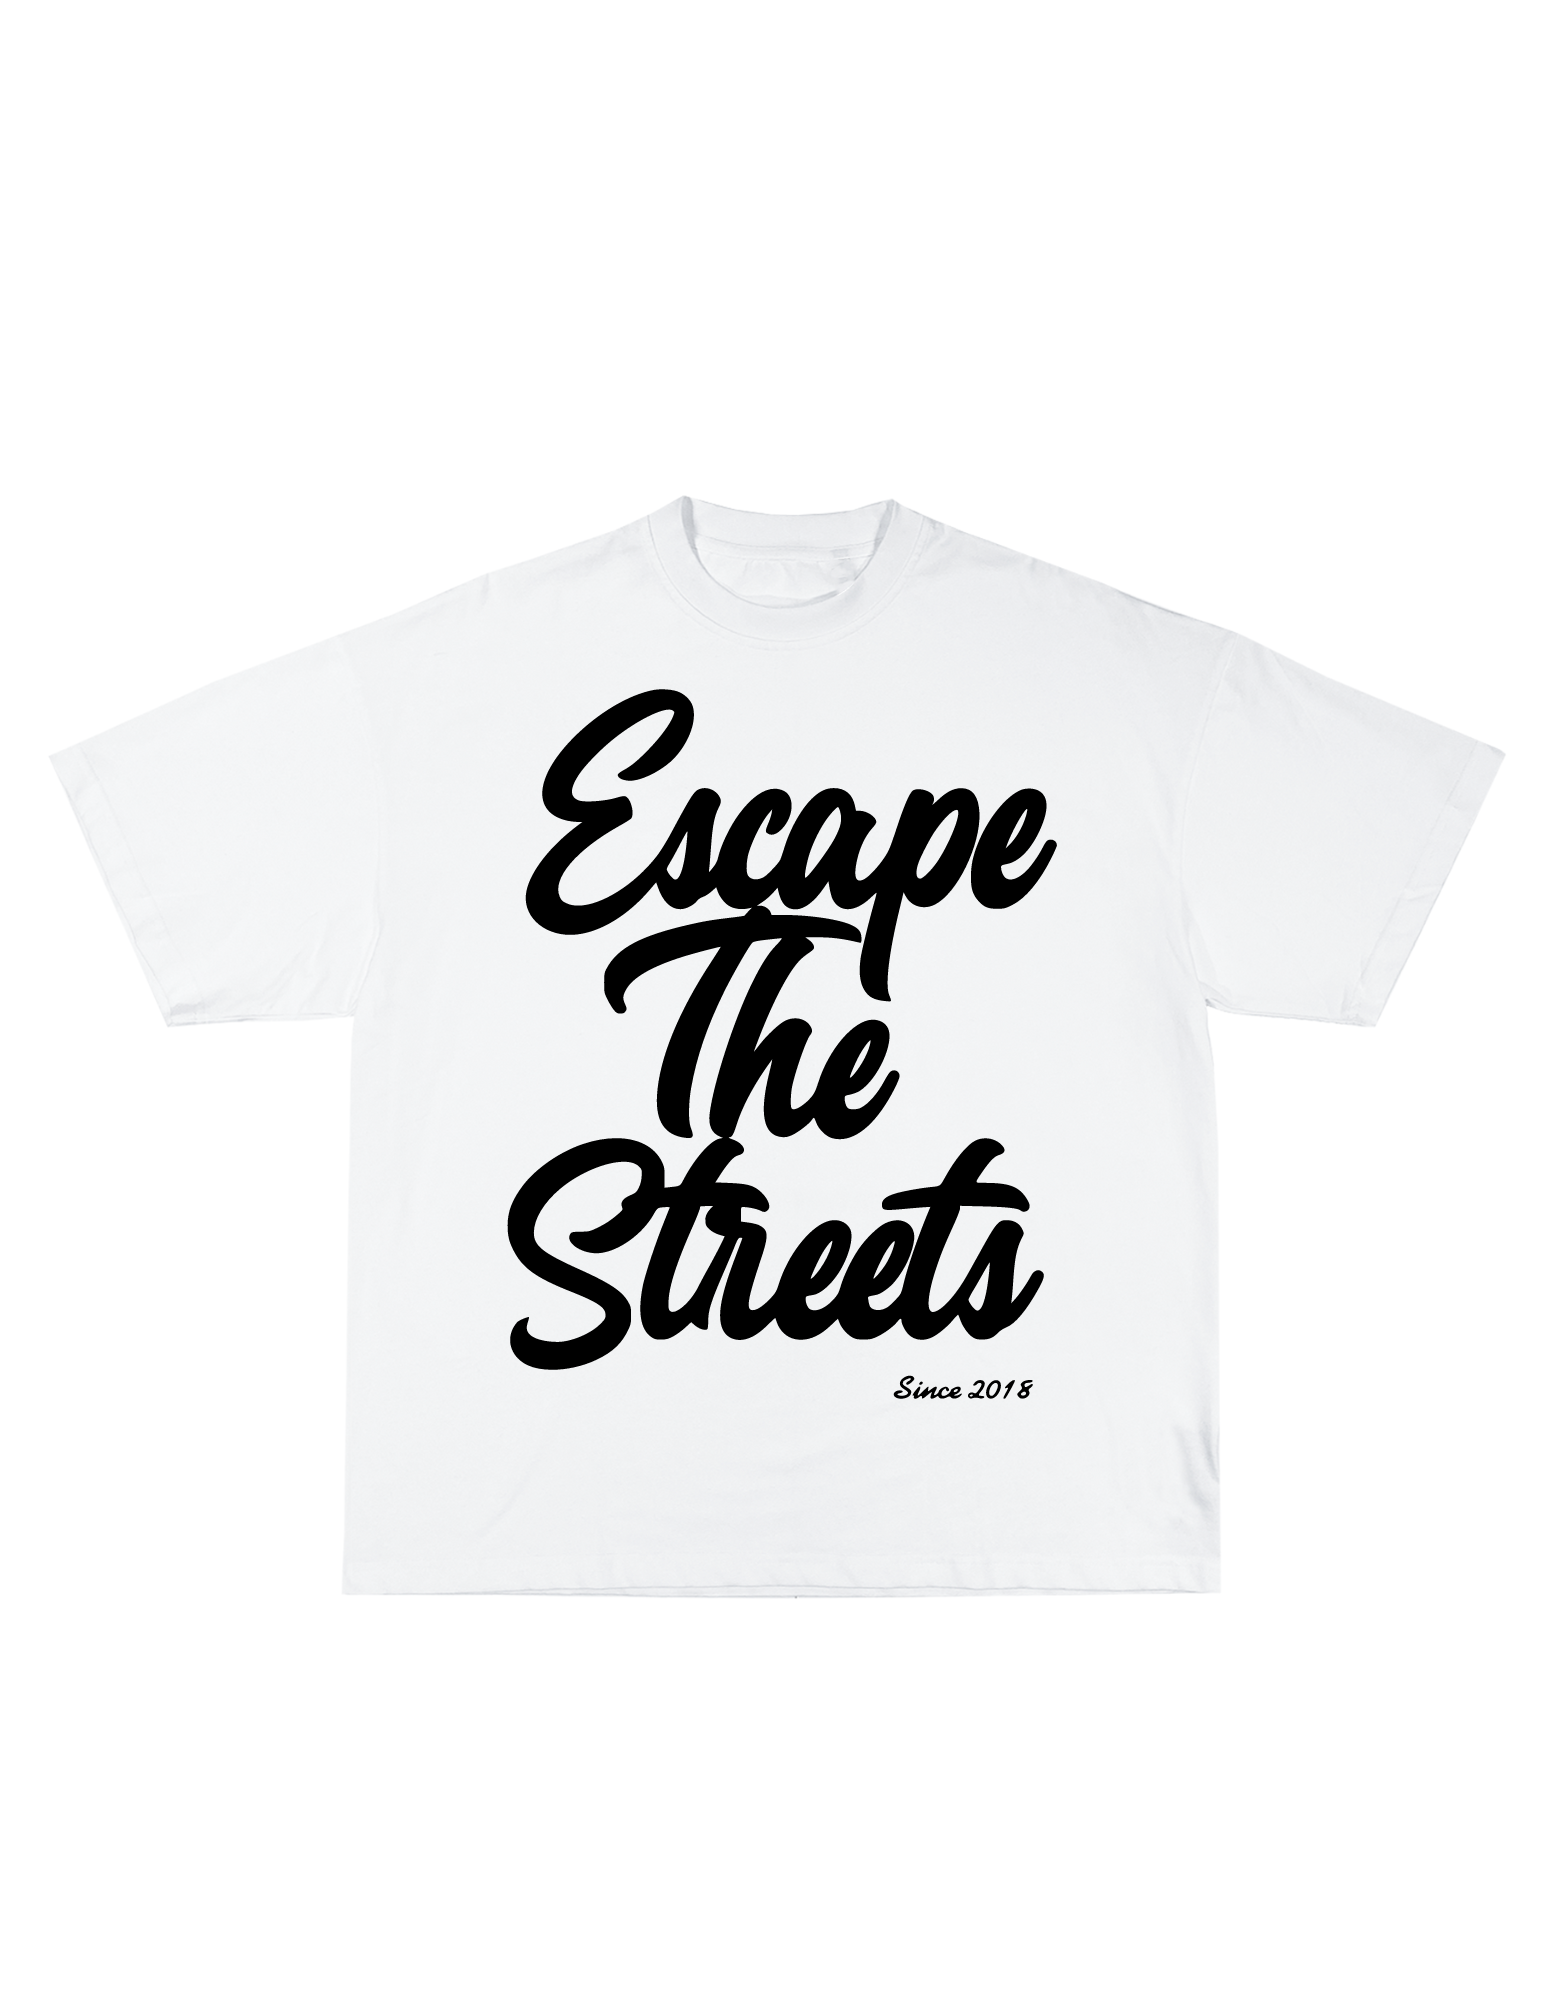 EscapeTheStreets T-Shirt White/Black